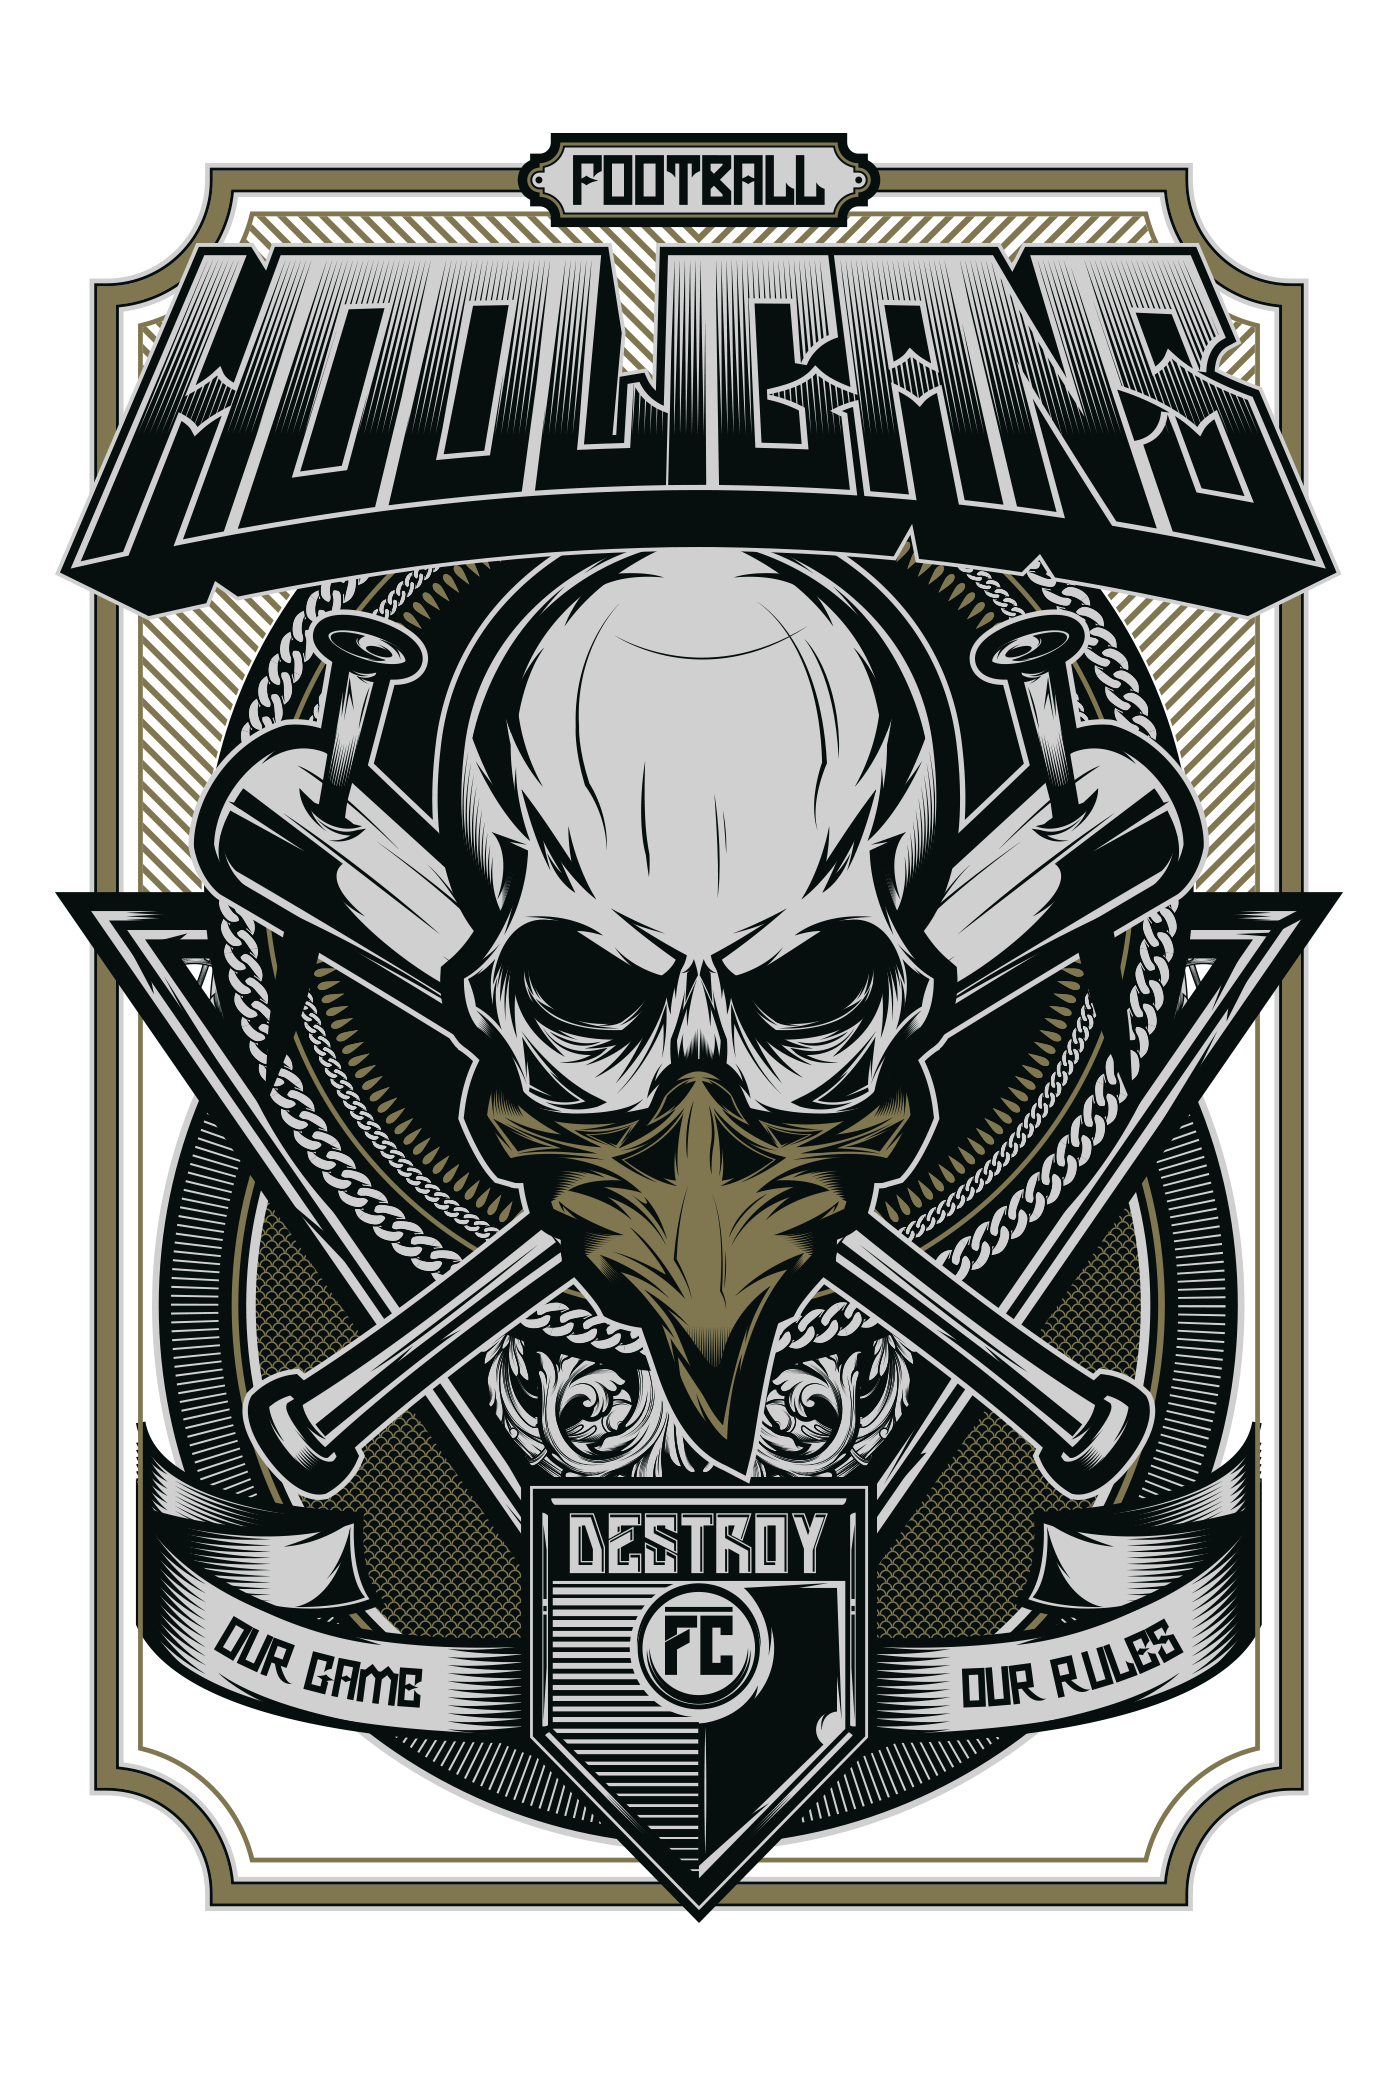 IcyBomb icy bomb skull hooligans football poster vector gold bat